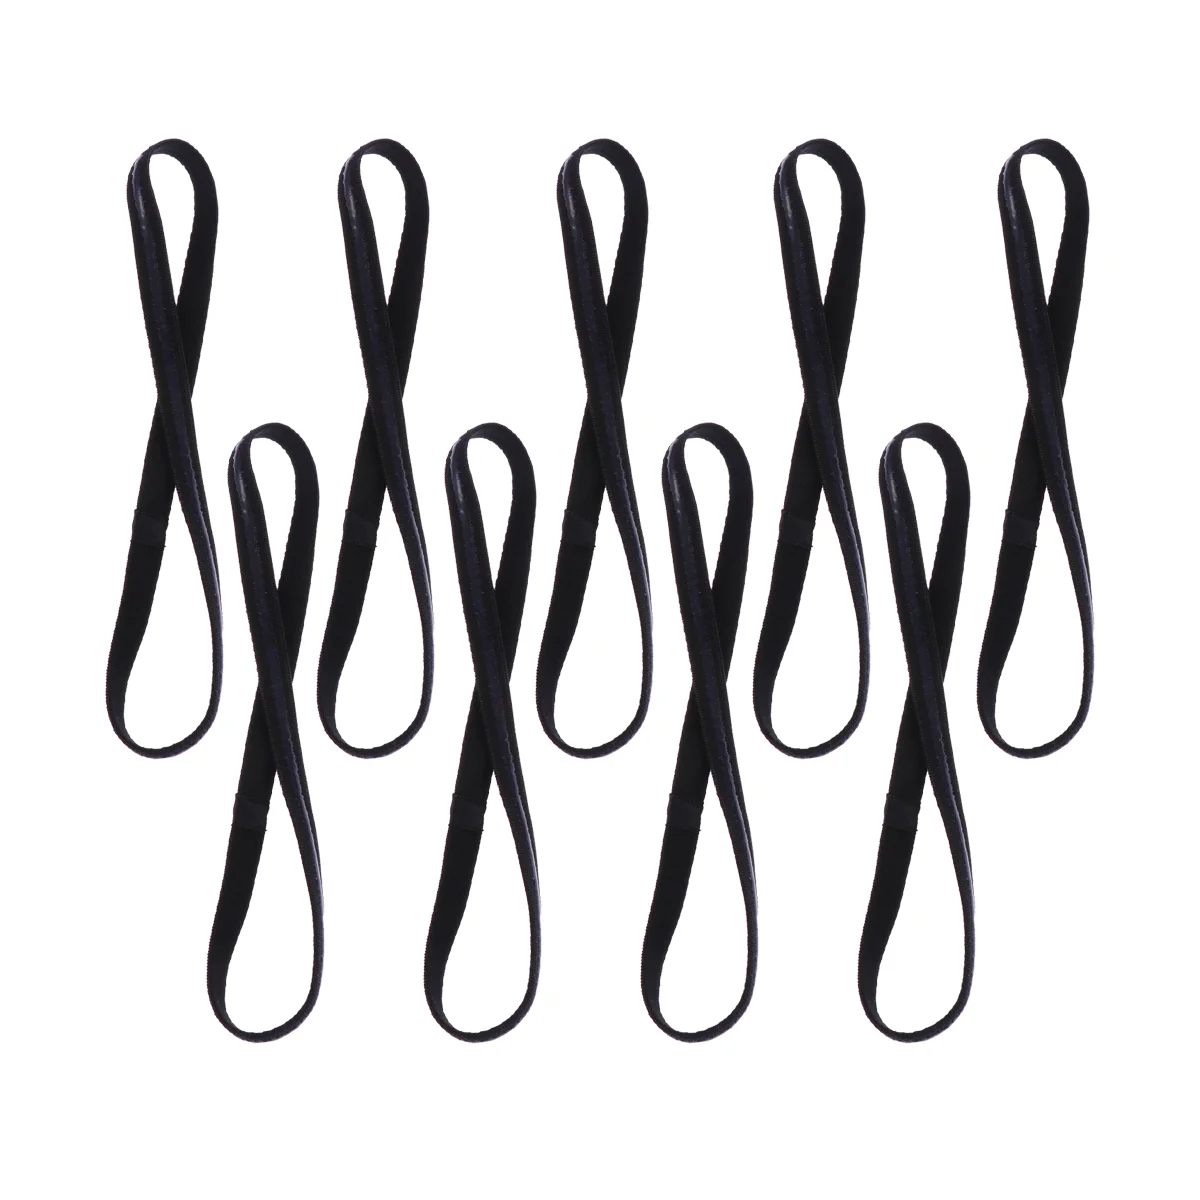 

9pcs Running Headband Stretchy Rope Football Non-slip Hair Accessories Yoga Hair Band Unisex Headband Black